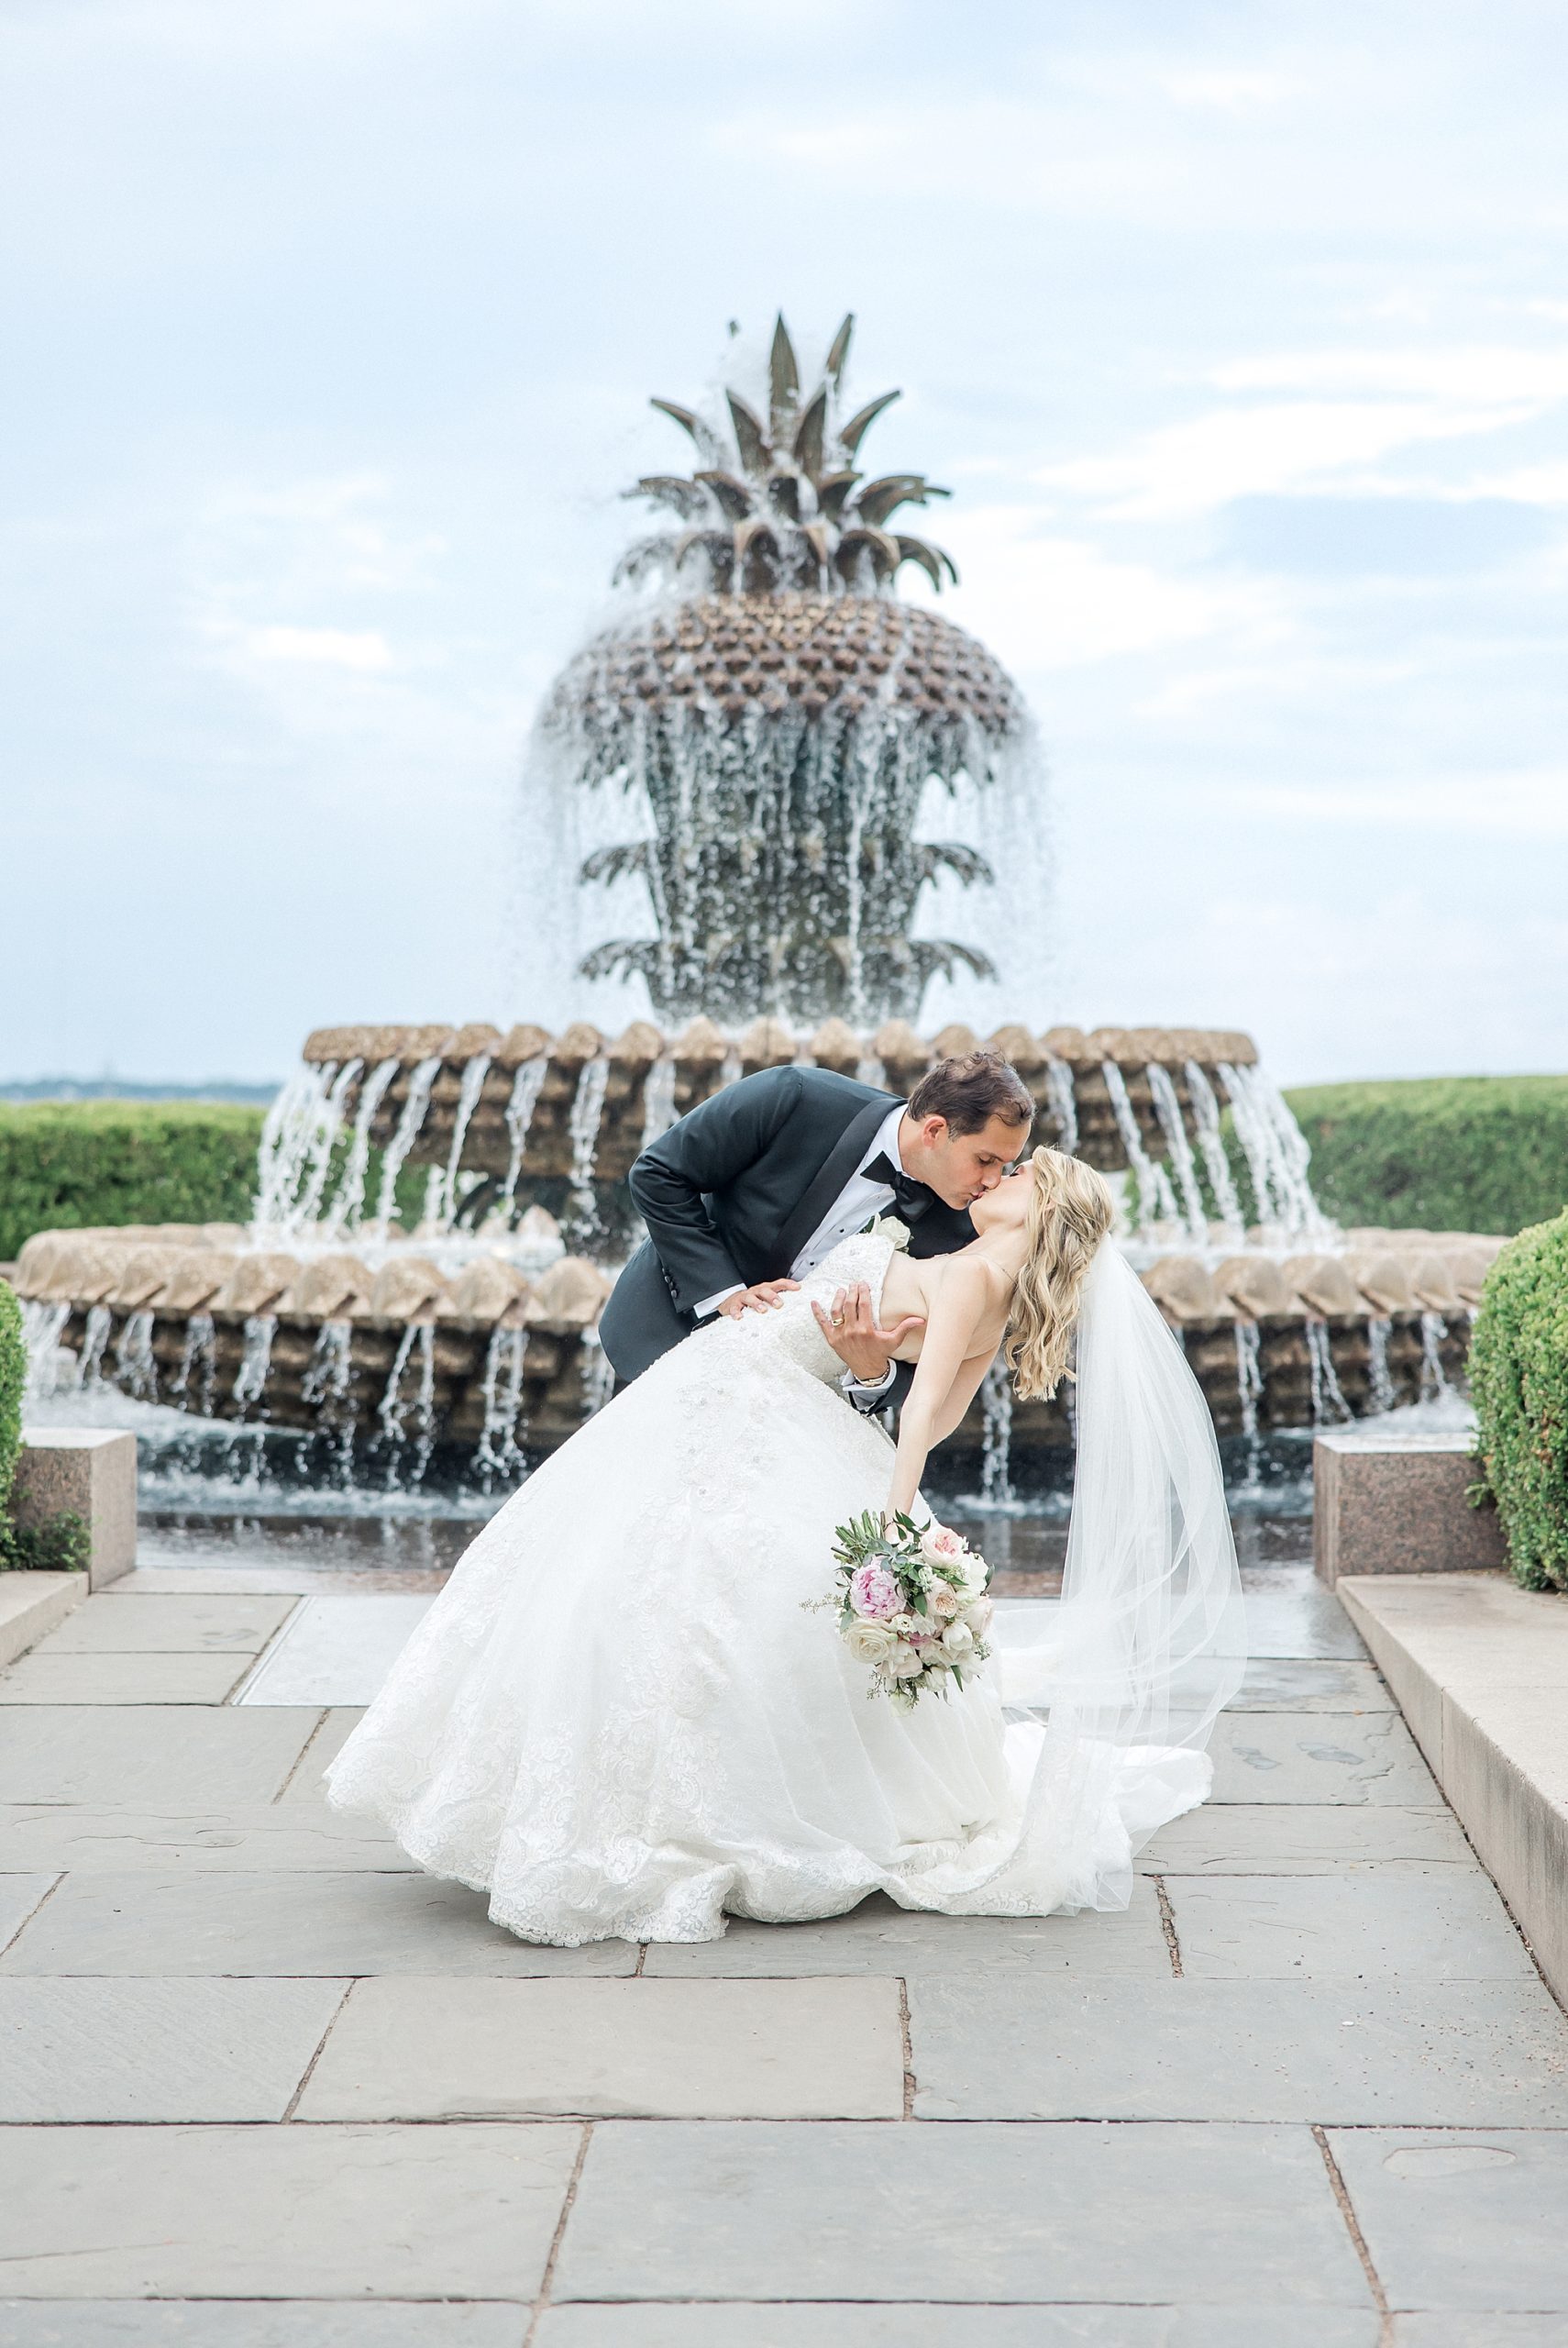 Charleston wedding portraits by iconic pineapple fountain